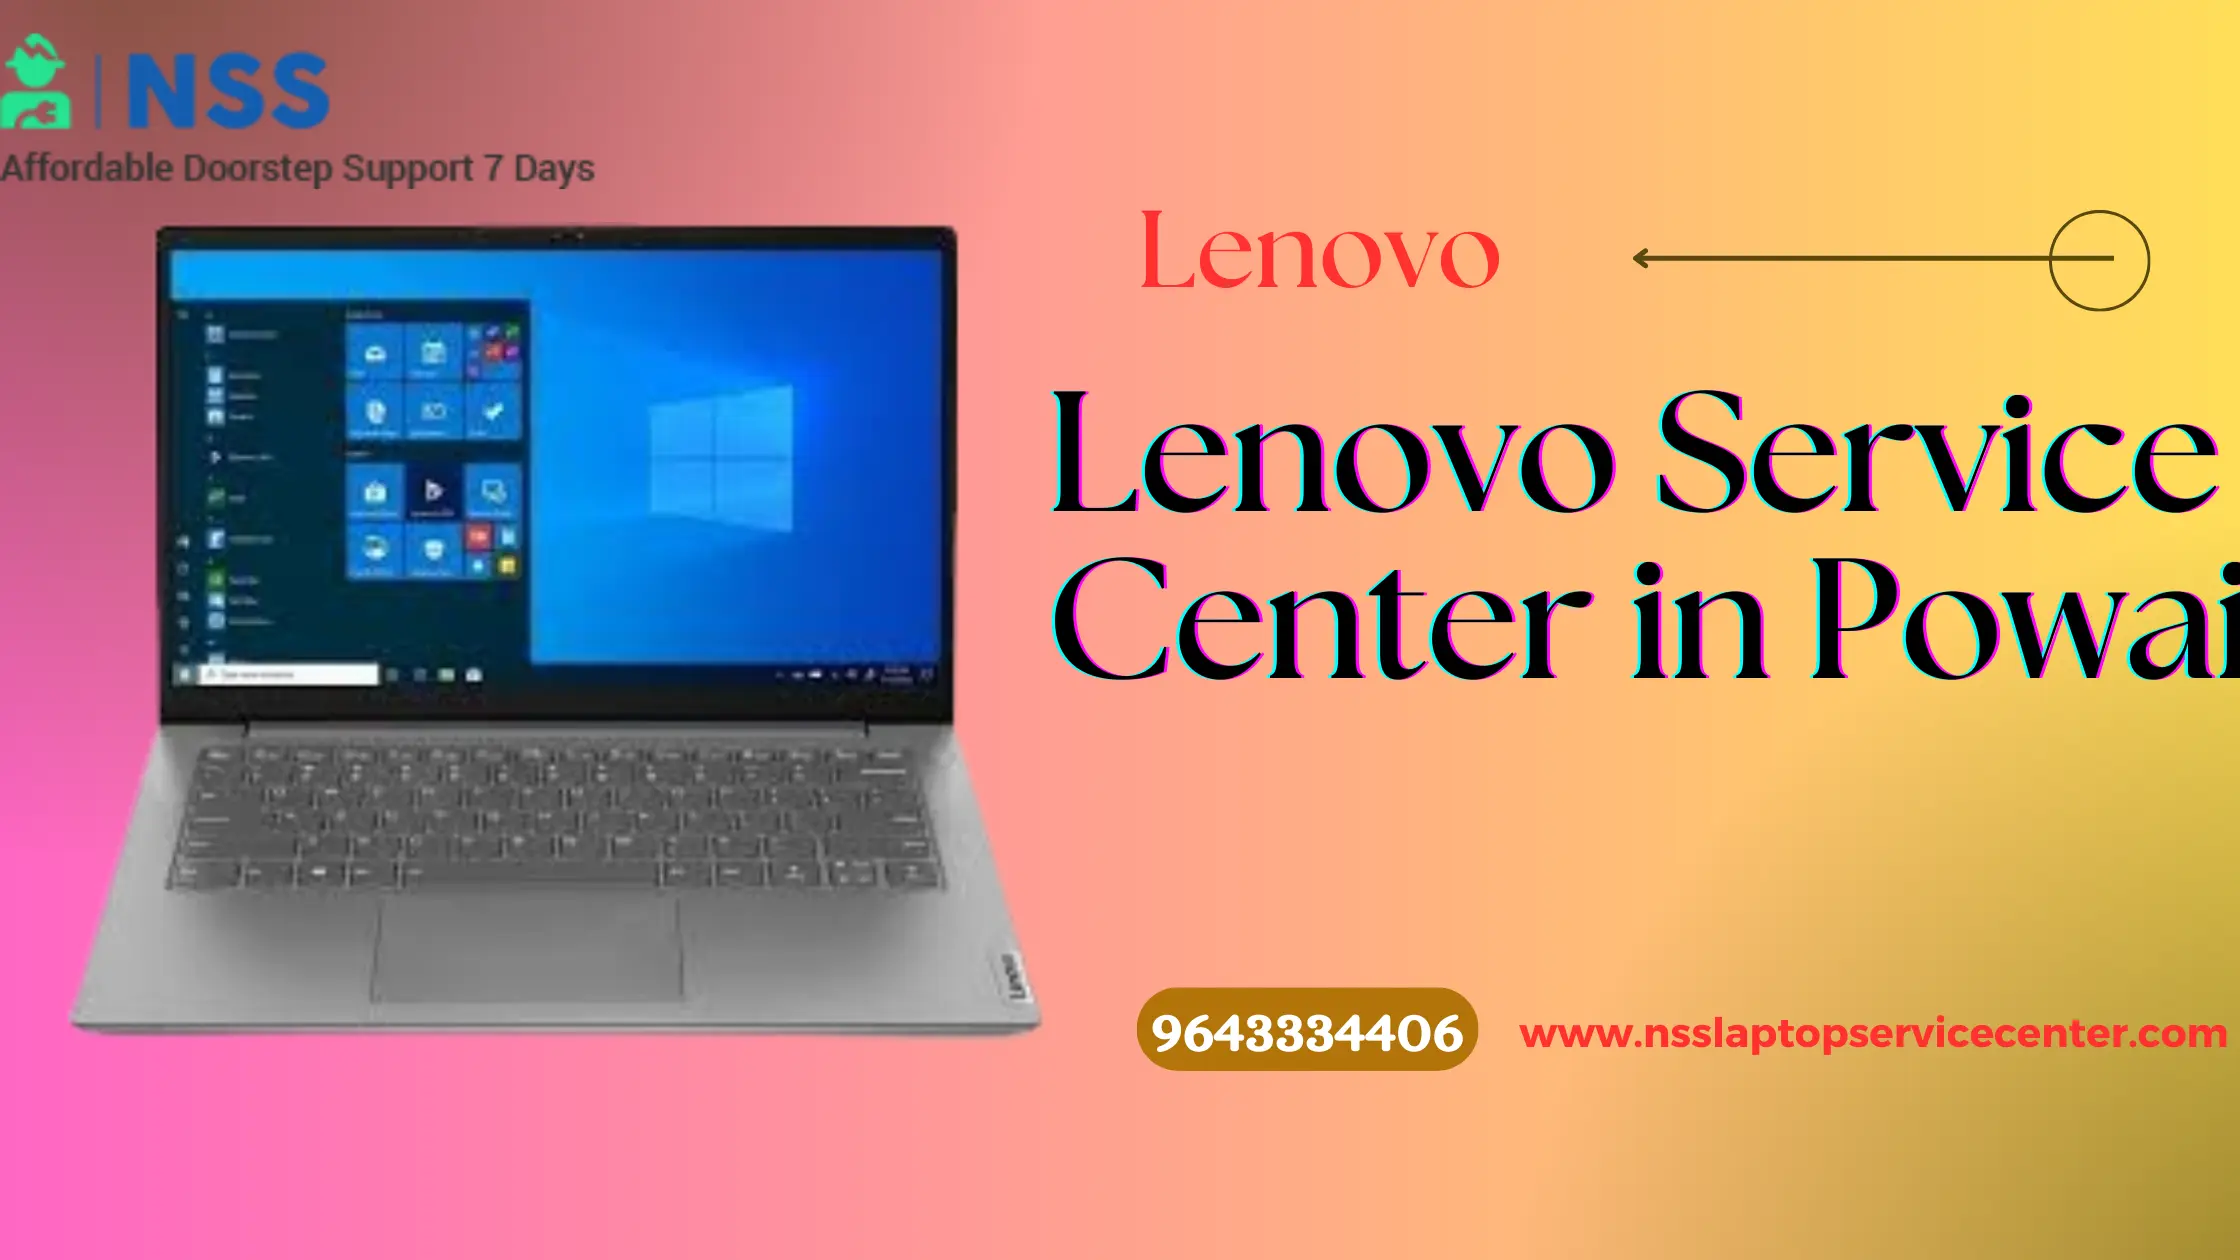 Lenovo Service Center in Powai Near Mumbai